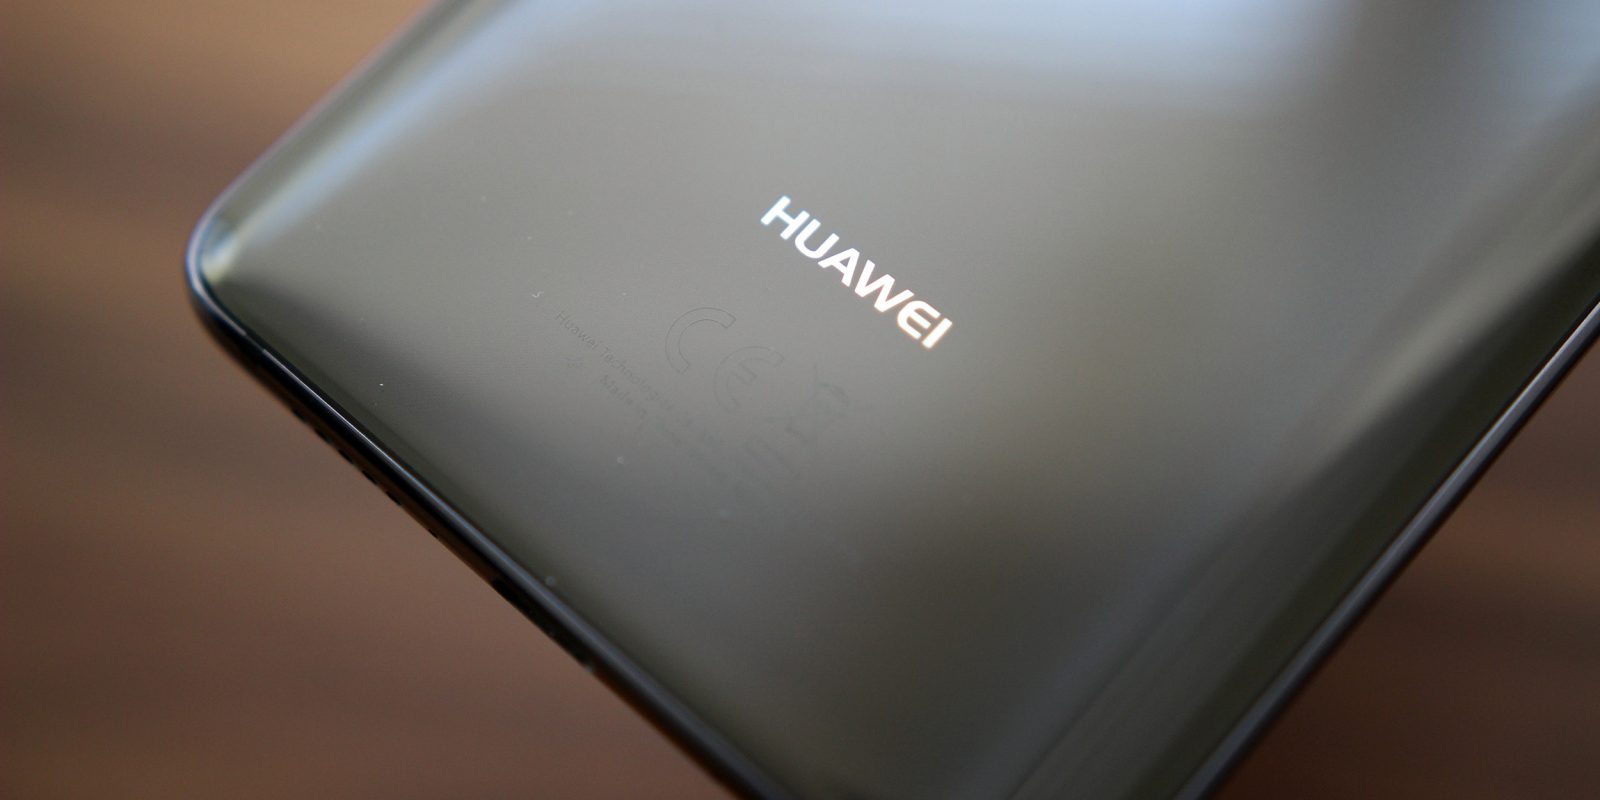 Huawei Mate 20 og Mate 20 Pro leveres med tredobbelt kameraopsætning og Kirin 980-chipsæt